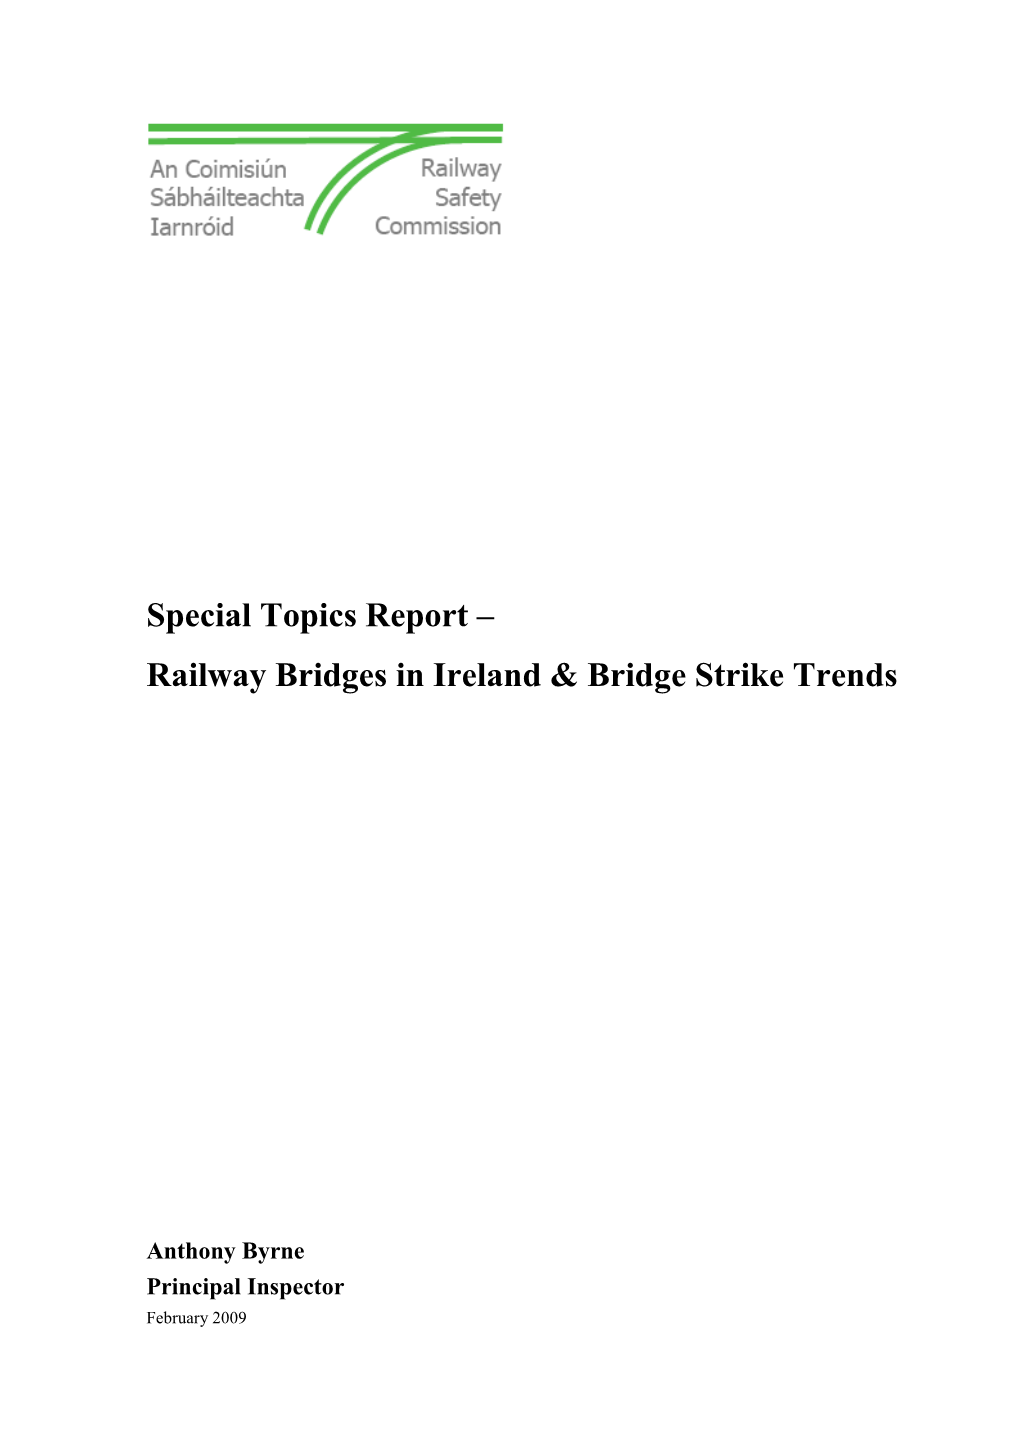 Railway Bridges in Ireland and Bridge Strike Trends Executive Summary